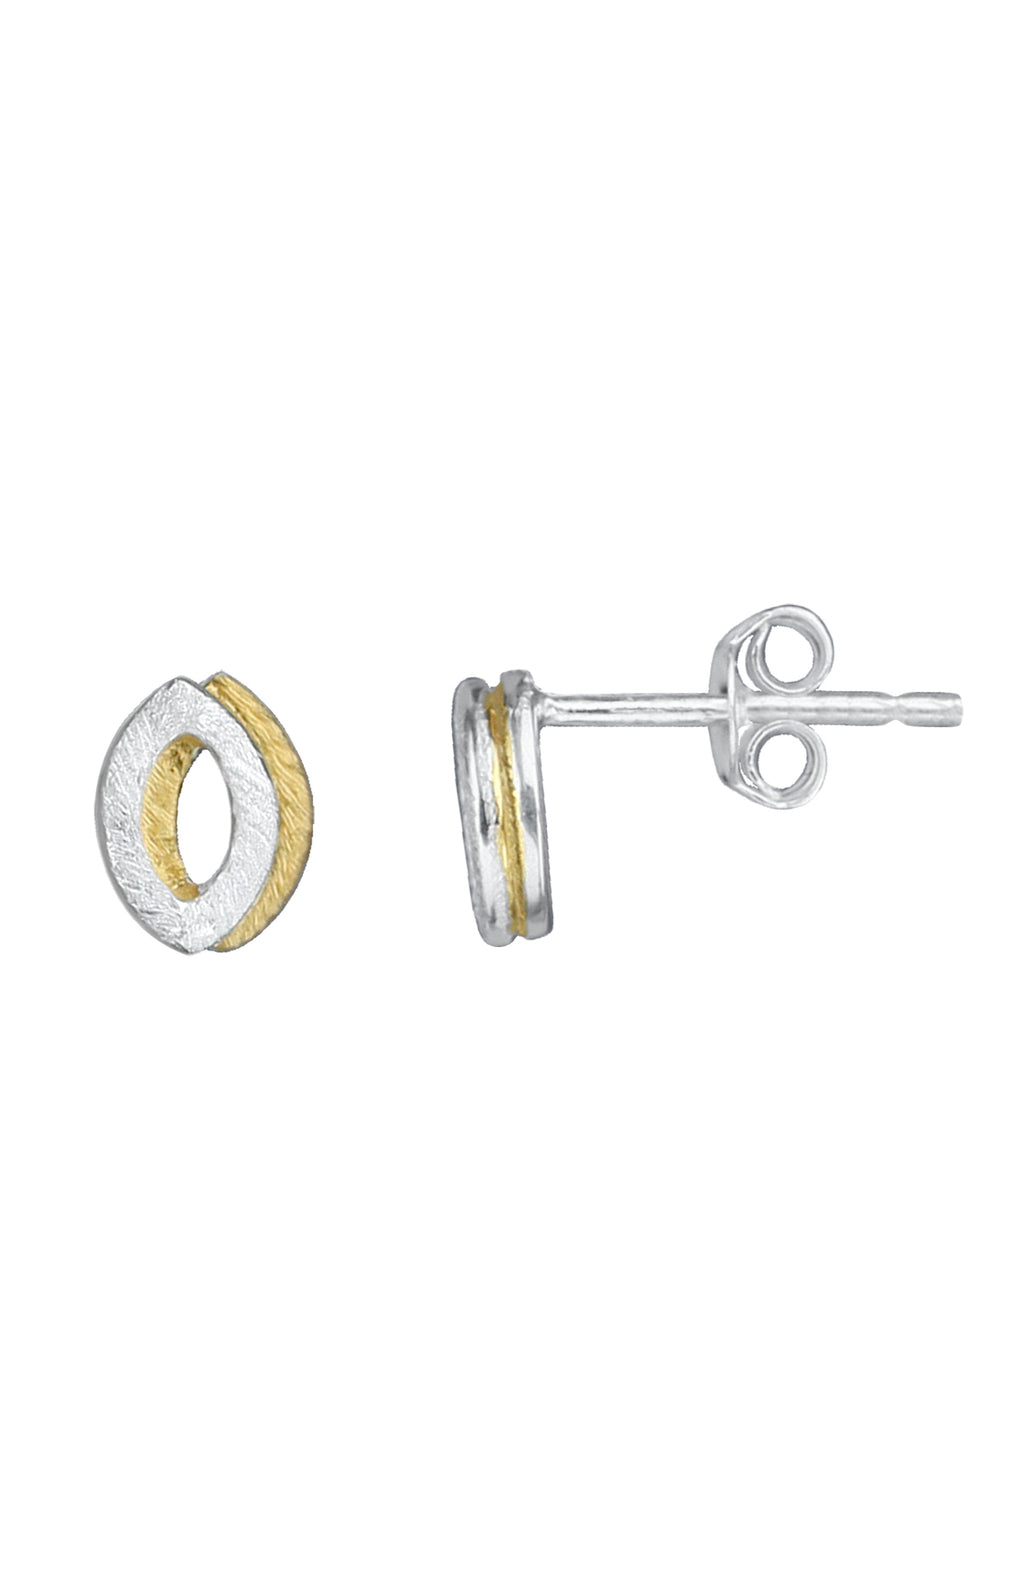 Brushed silver & gold plating stud earrings / Nina B Jewellery